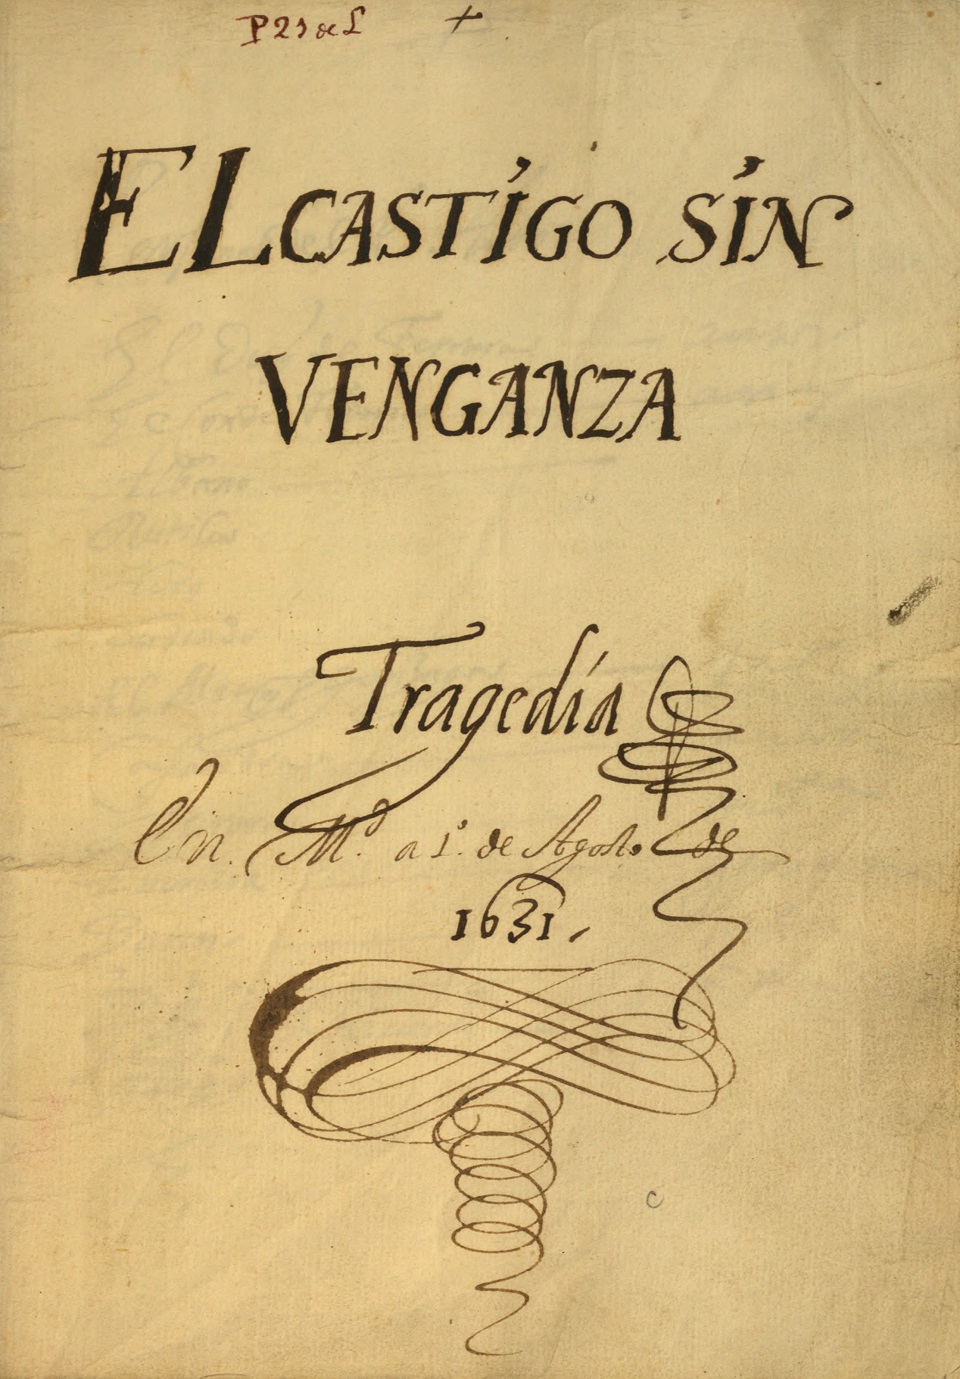 27.04.2023, 8:30-El castigo sin venganza and Lope de Vega’s concept of tragedy